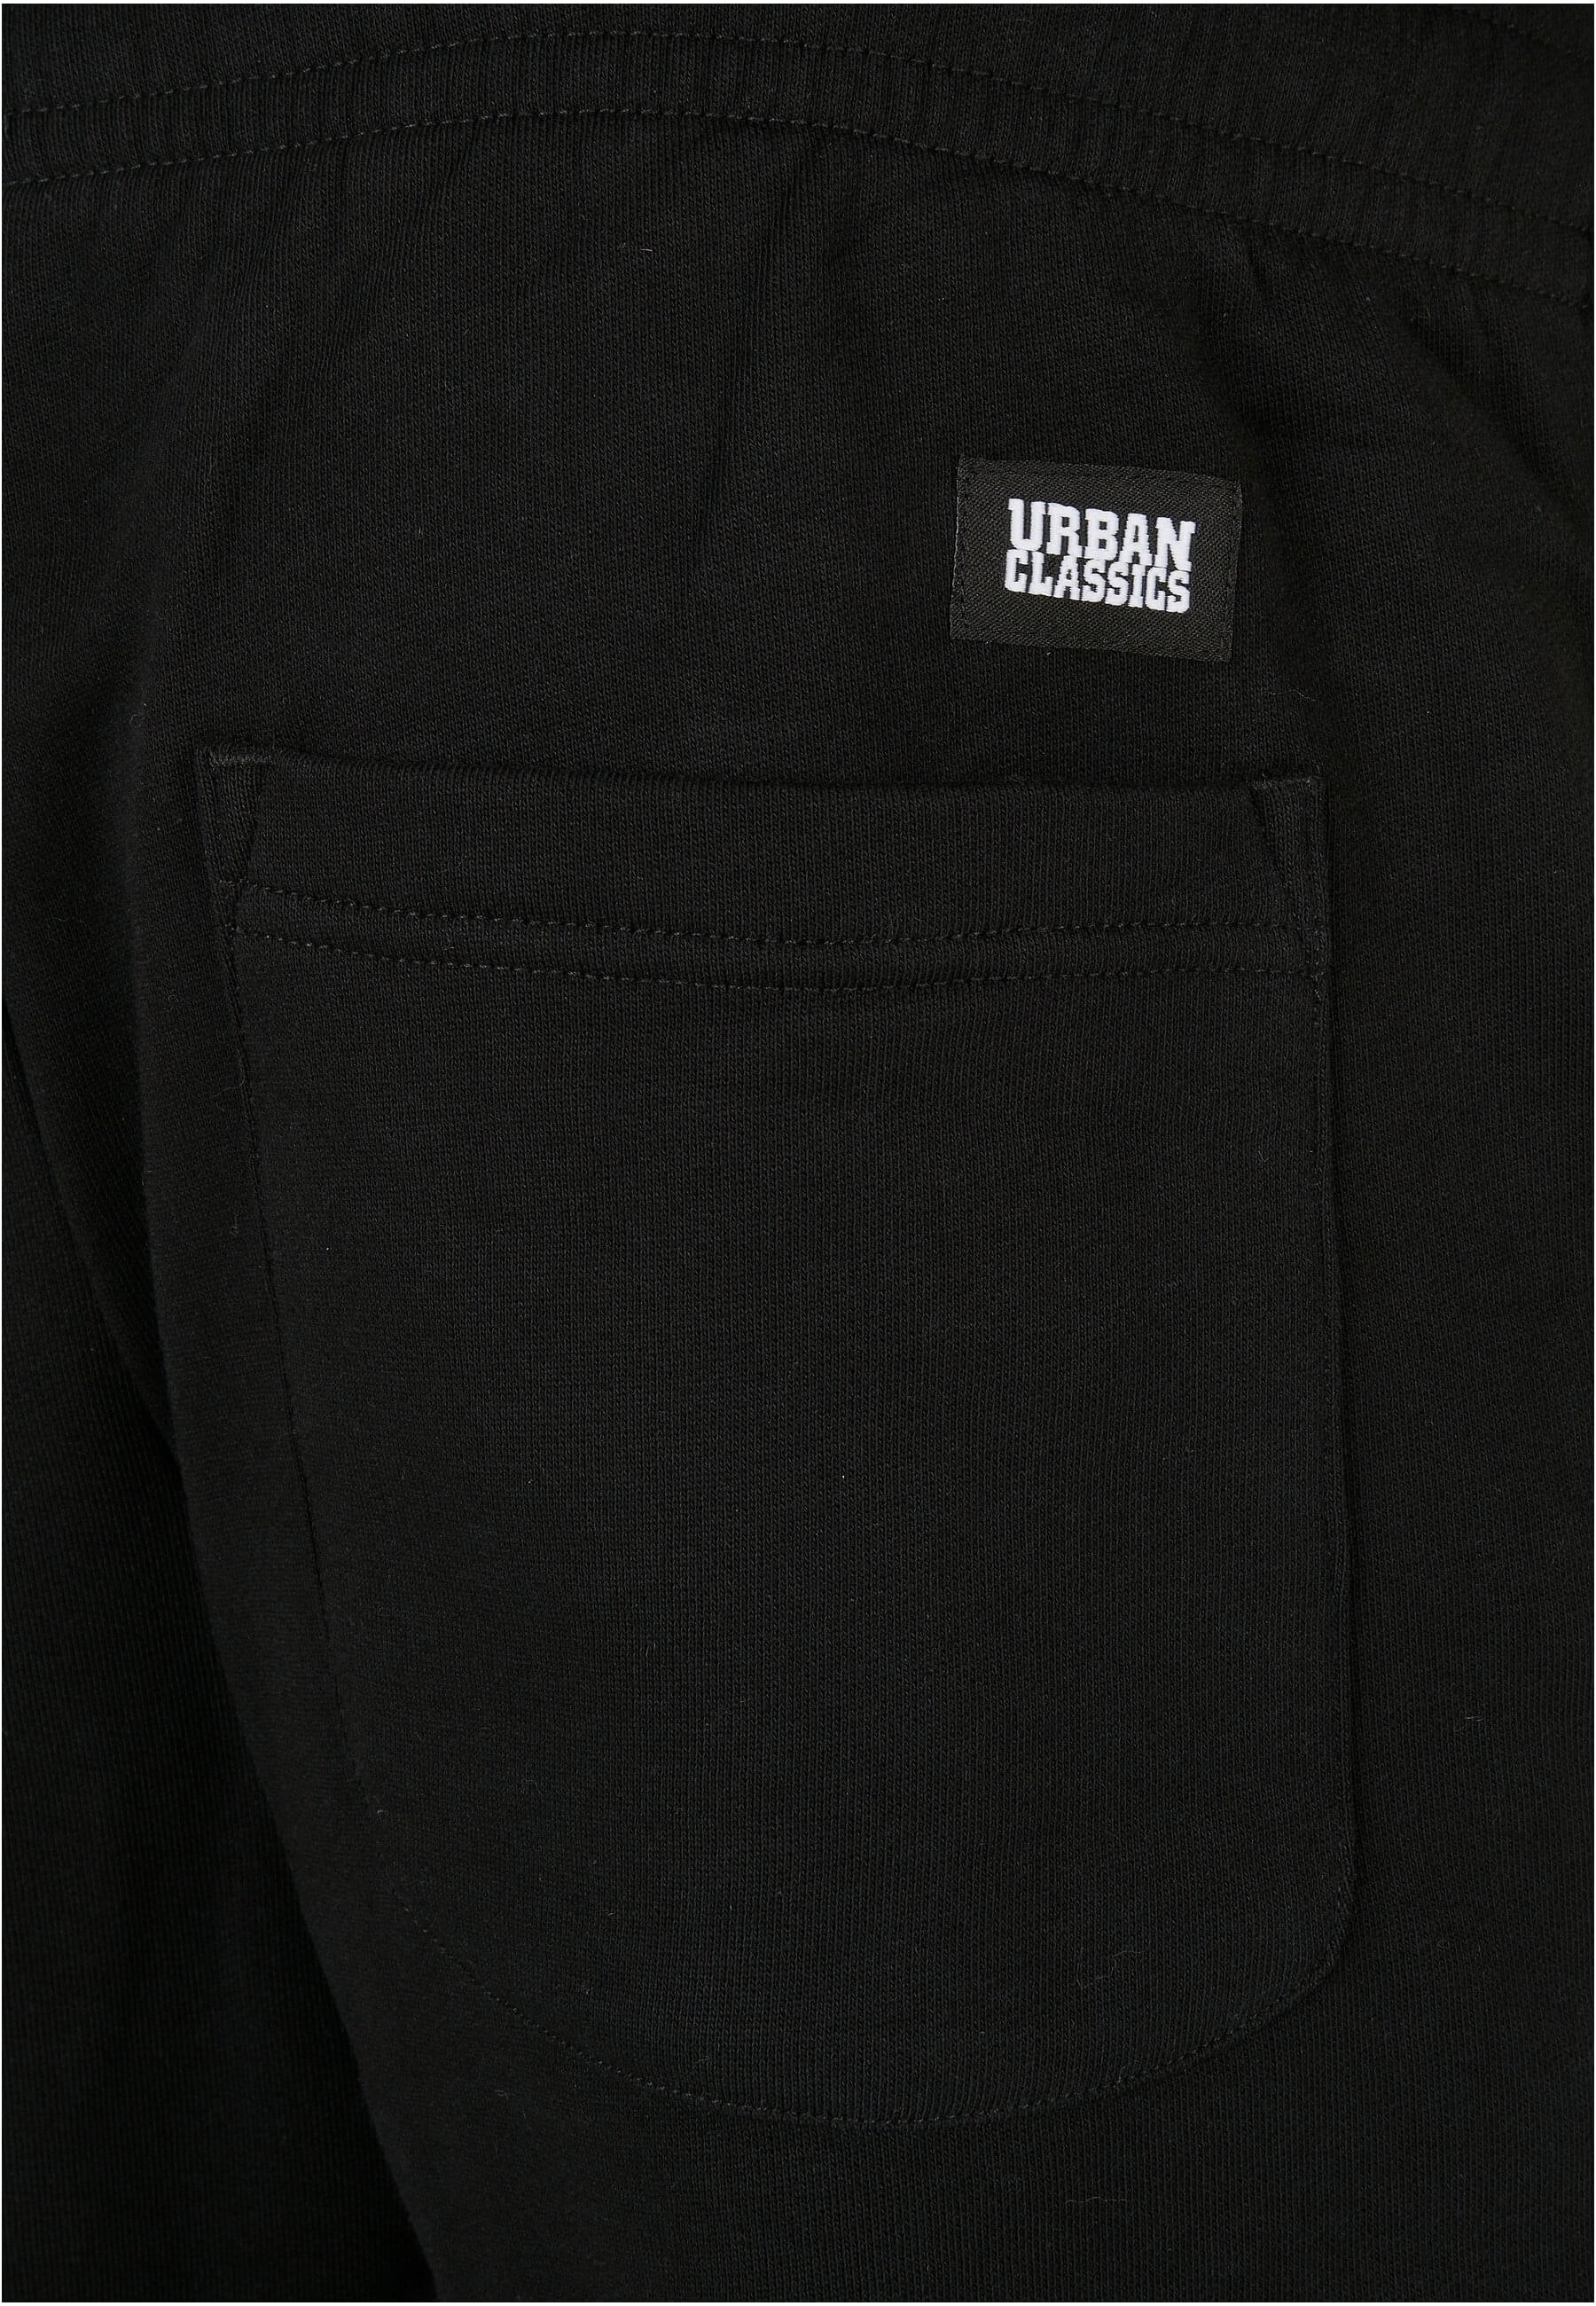 URBAN CLASSICS Trainingsanzug »Urban Classics Herren Basic Sweat Suit«, (2 tlg.)